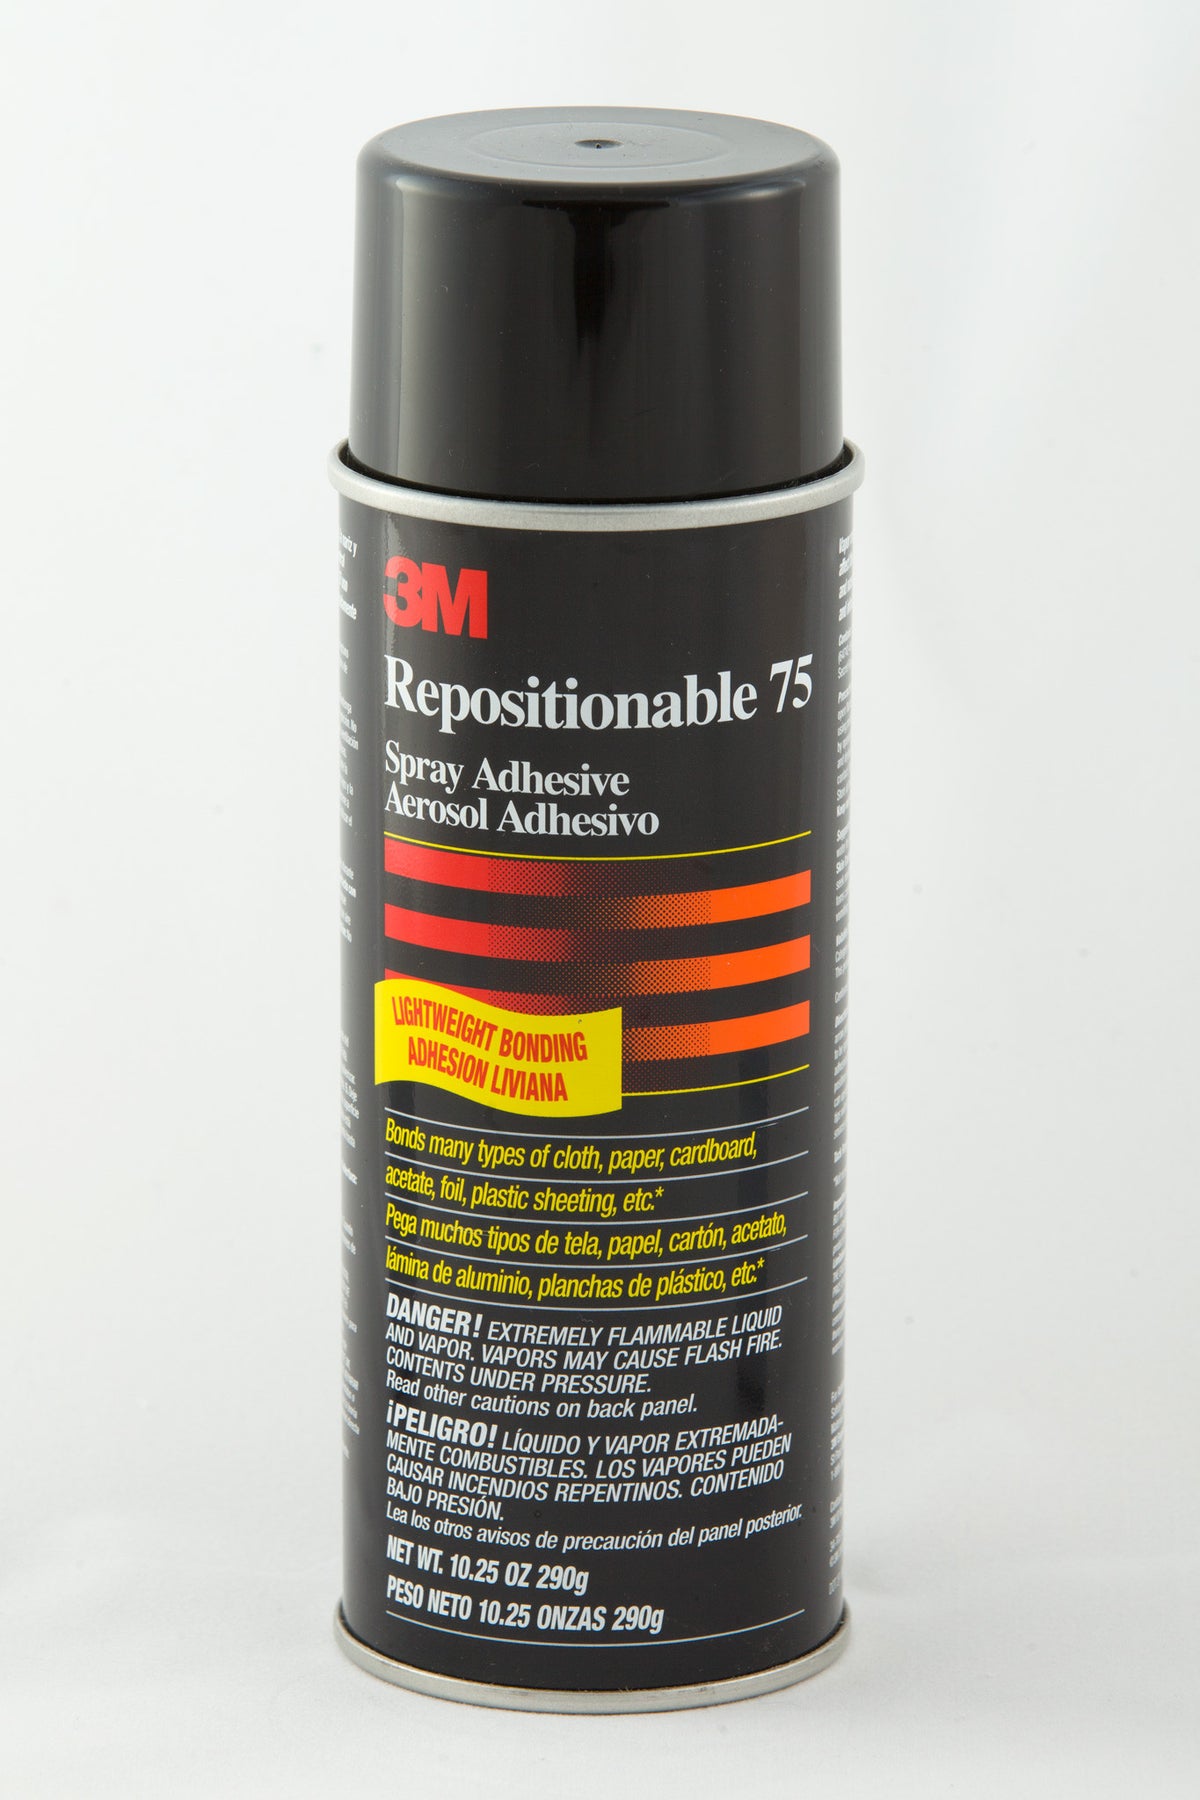 3M™ Repositionable 75 Spray Adhesive, Net Wt 10.25 oz, 12 per case